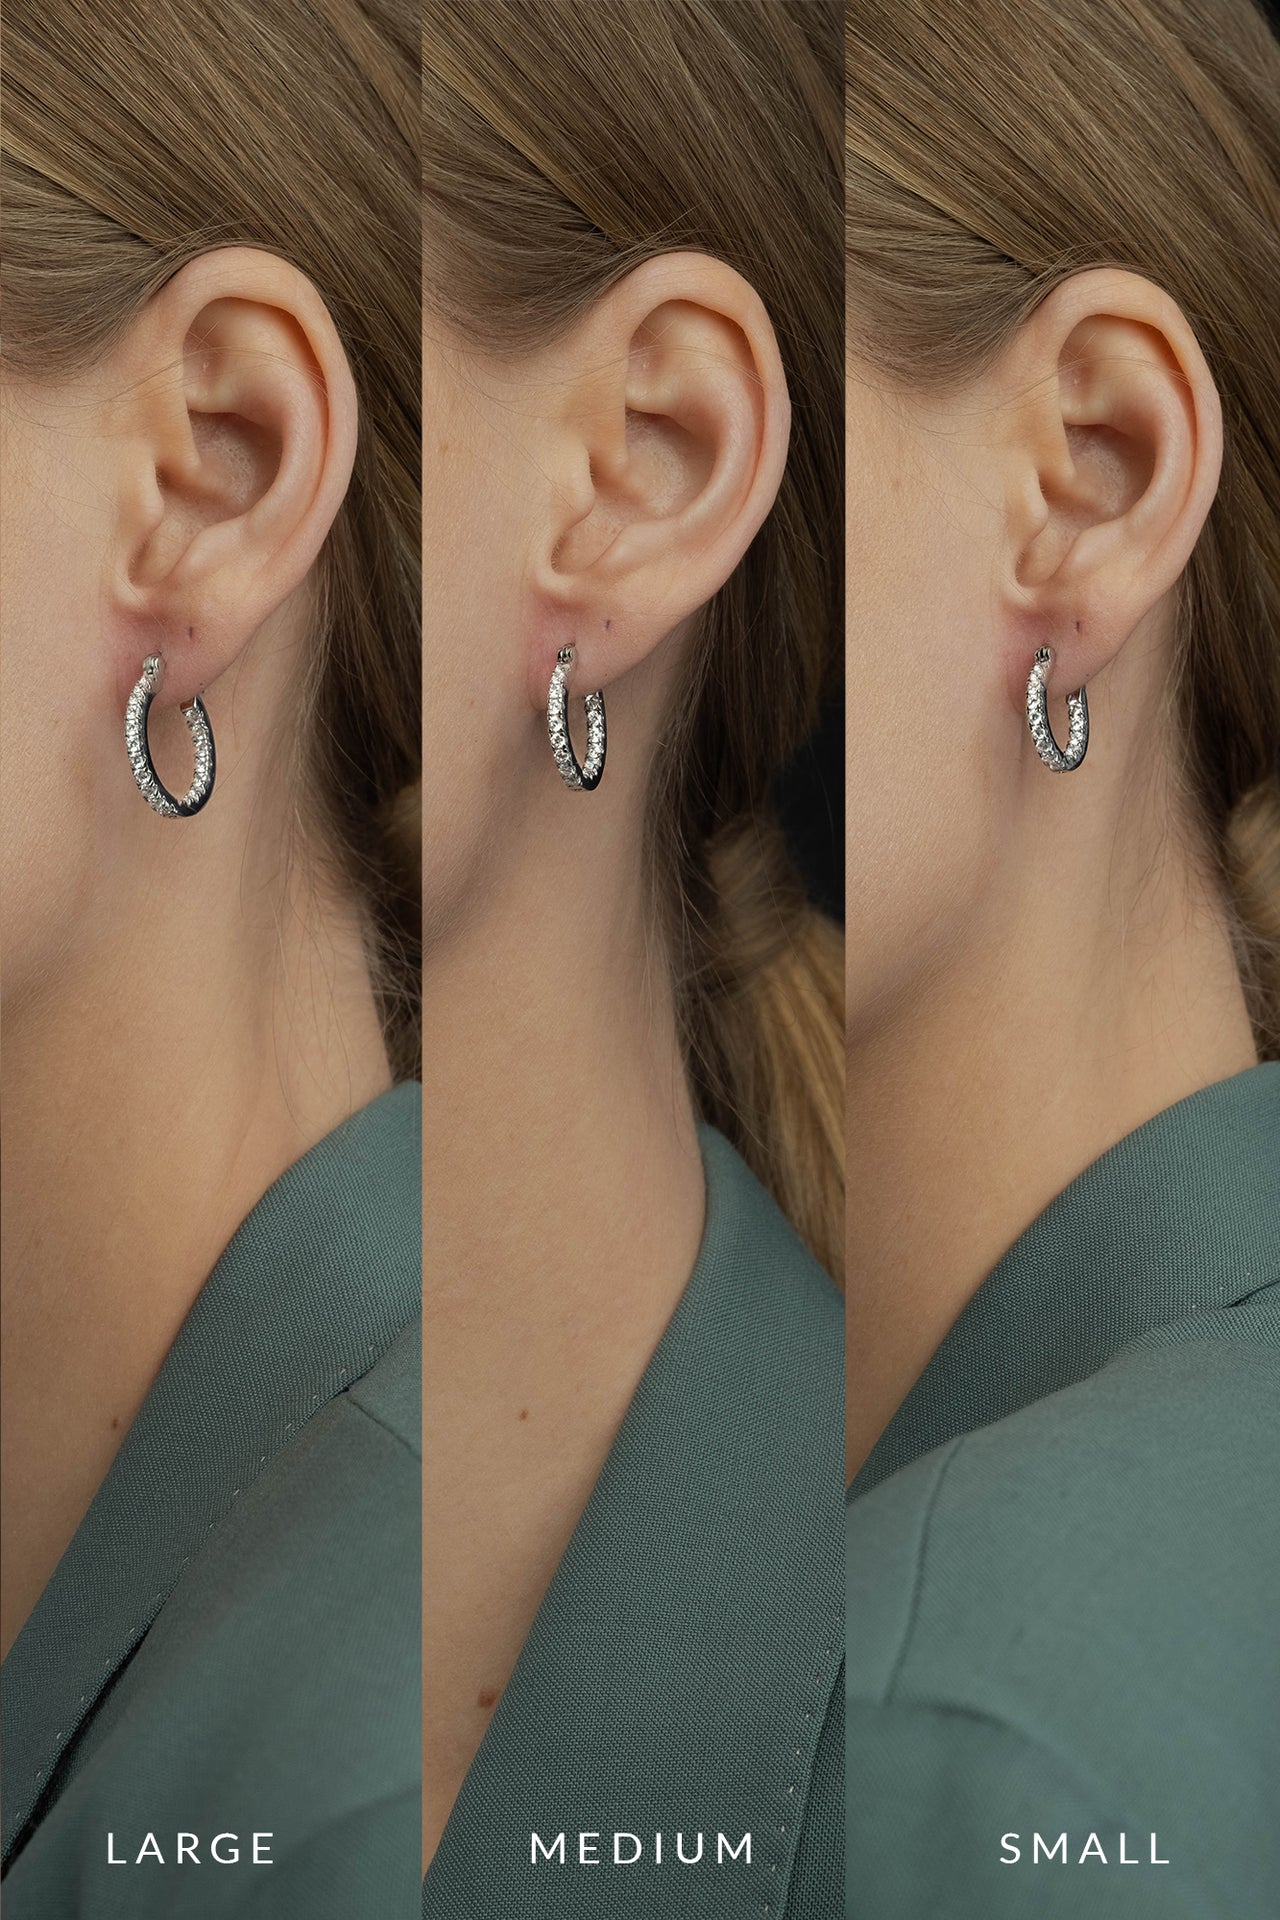 Lunar Earrings Silver / White